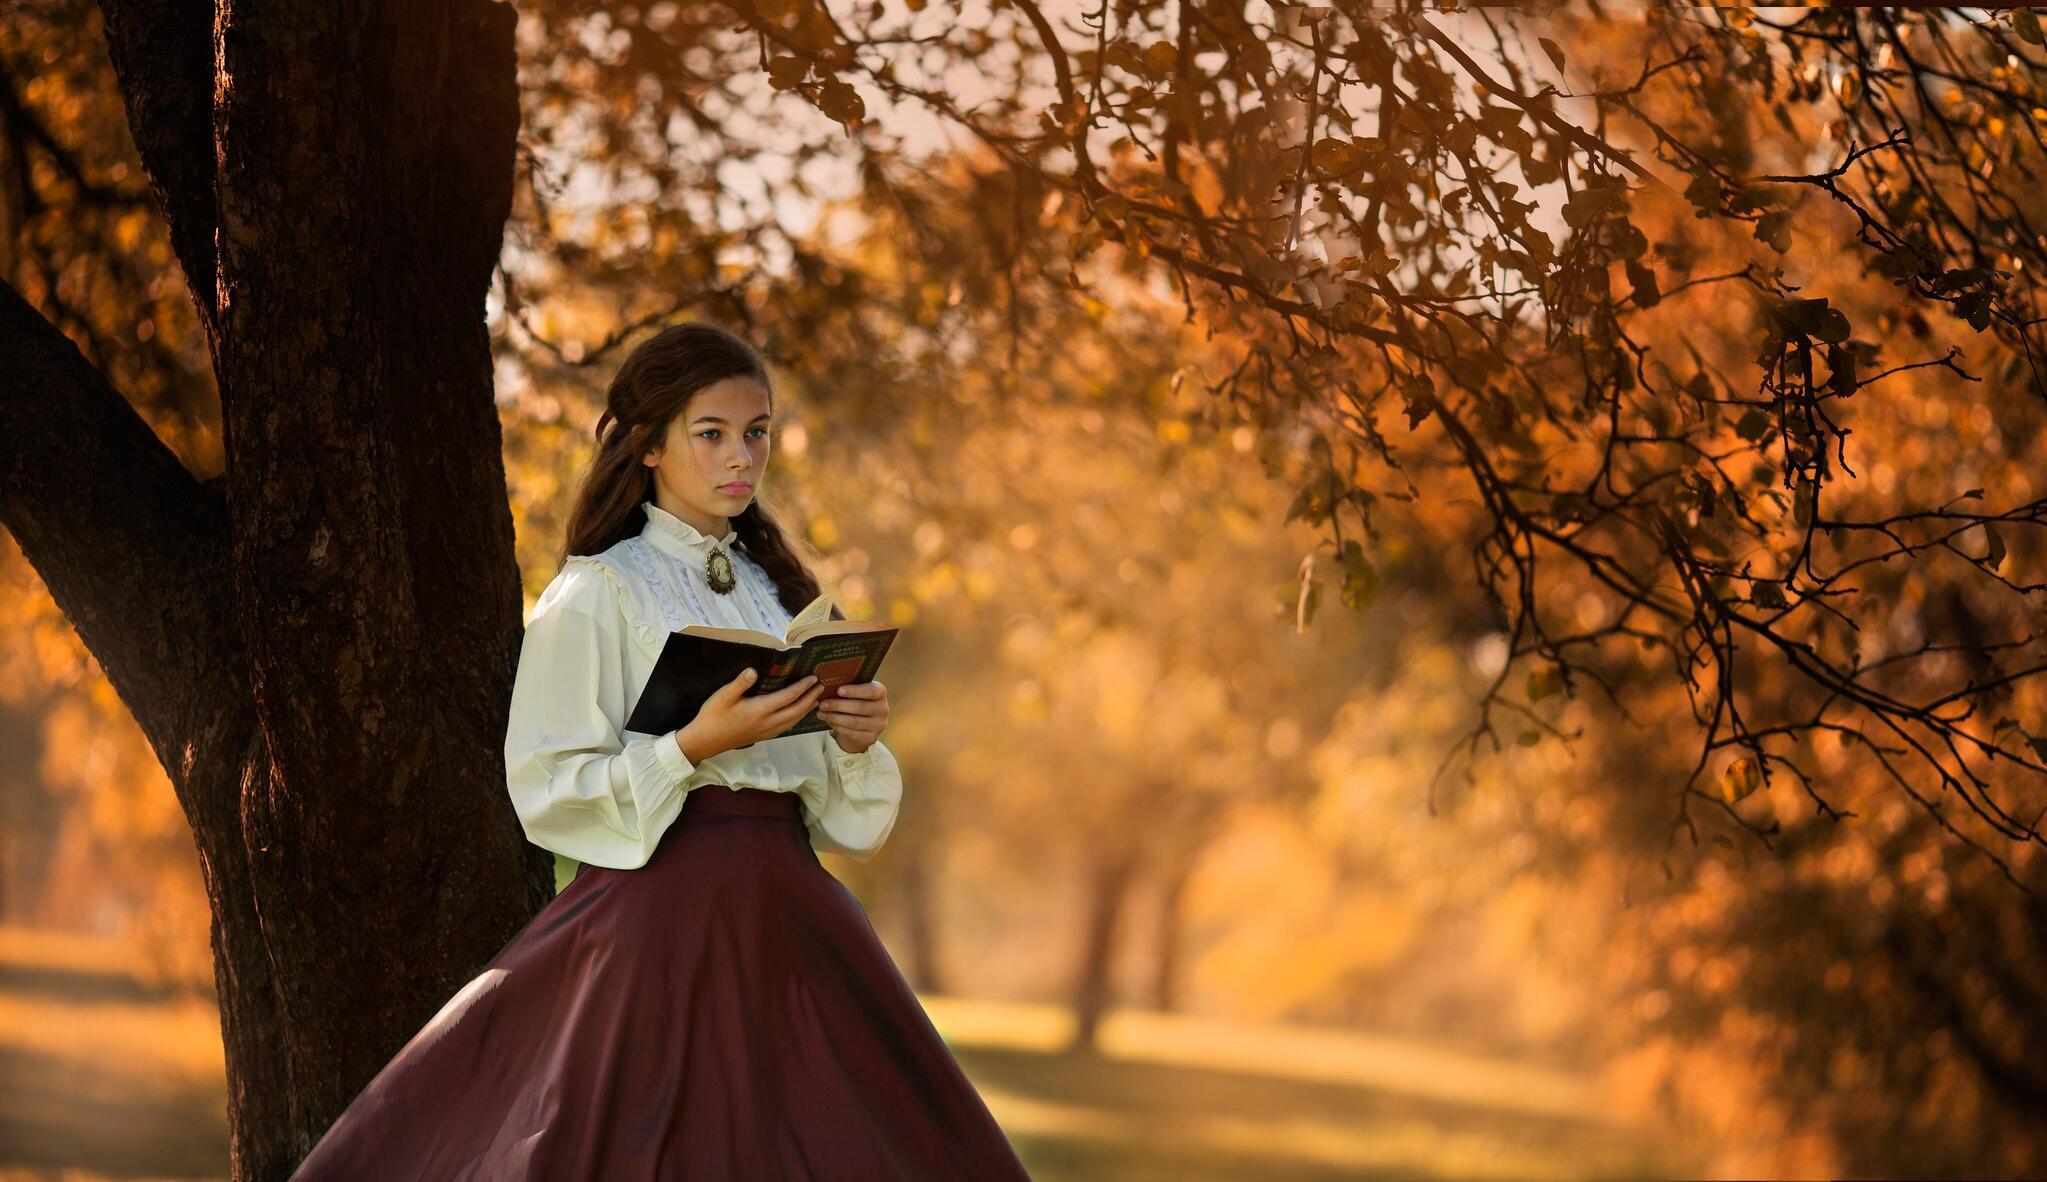 Барышни тест. Девушка с книгой. Фотосессия с книгой осенью. Осенняя фотосессия с книгой. Фотосессия в осеннем стиле.